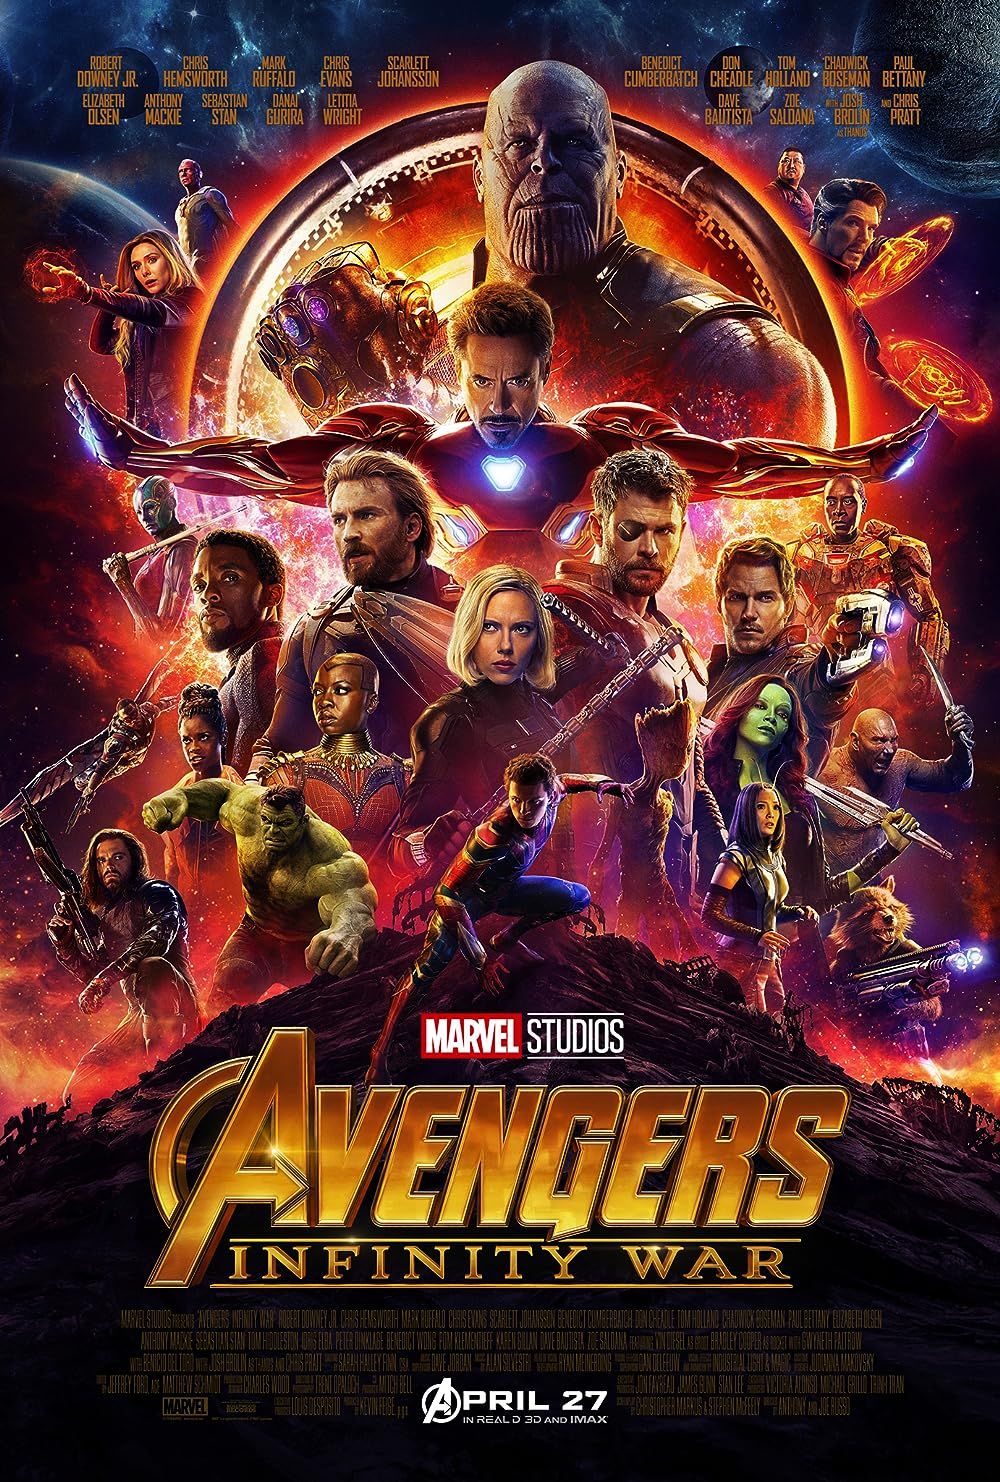 El elenco de Avengers Infinity War en el cartel de la película